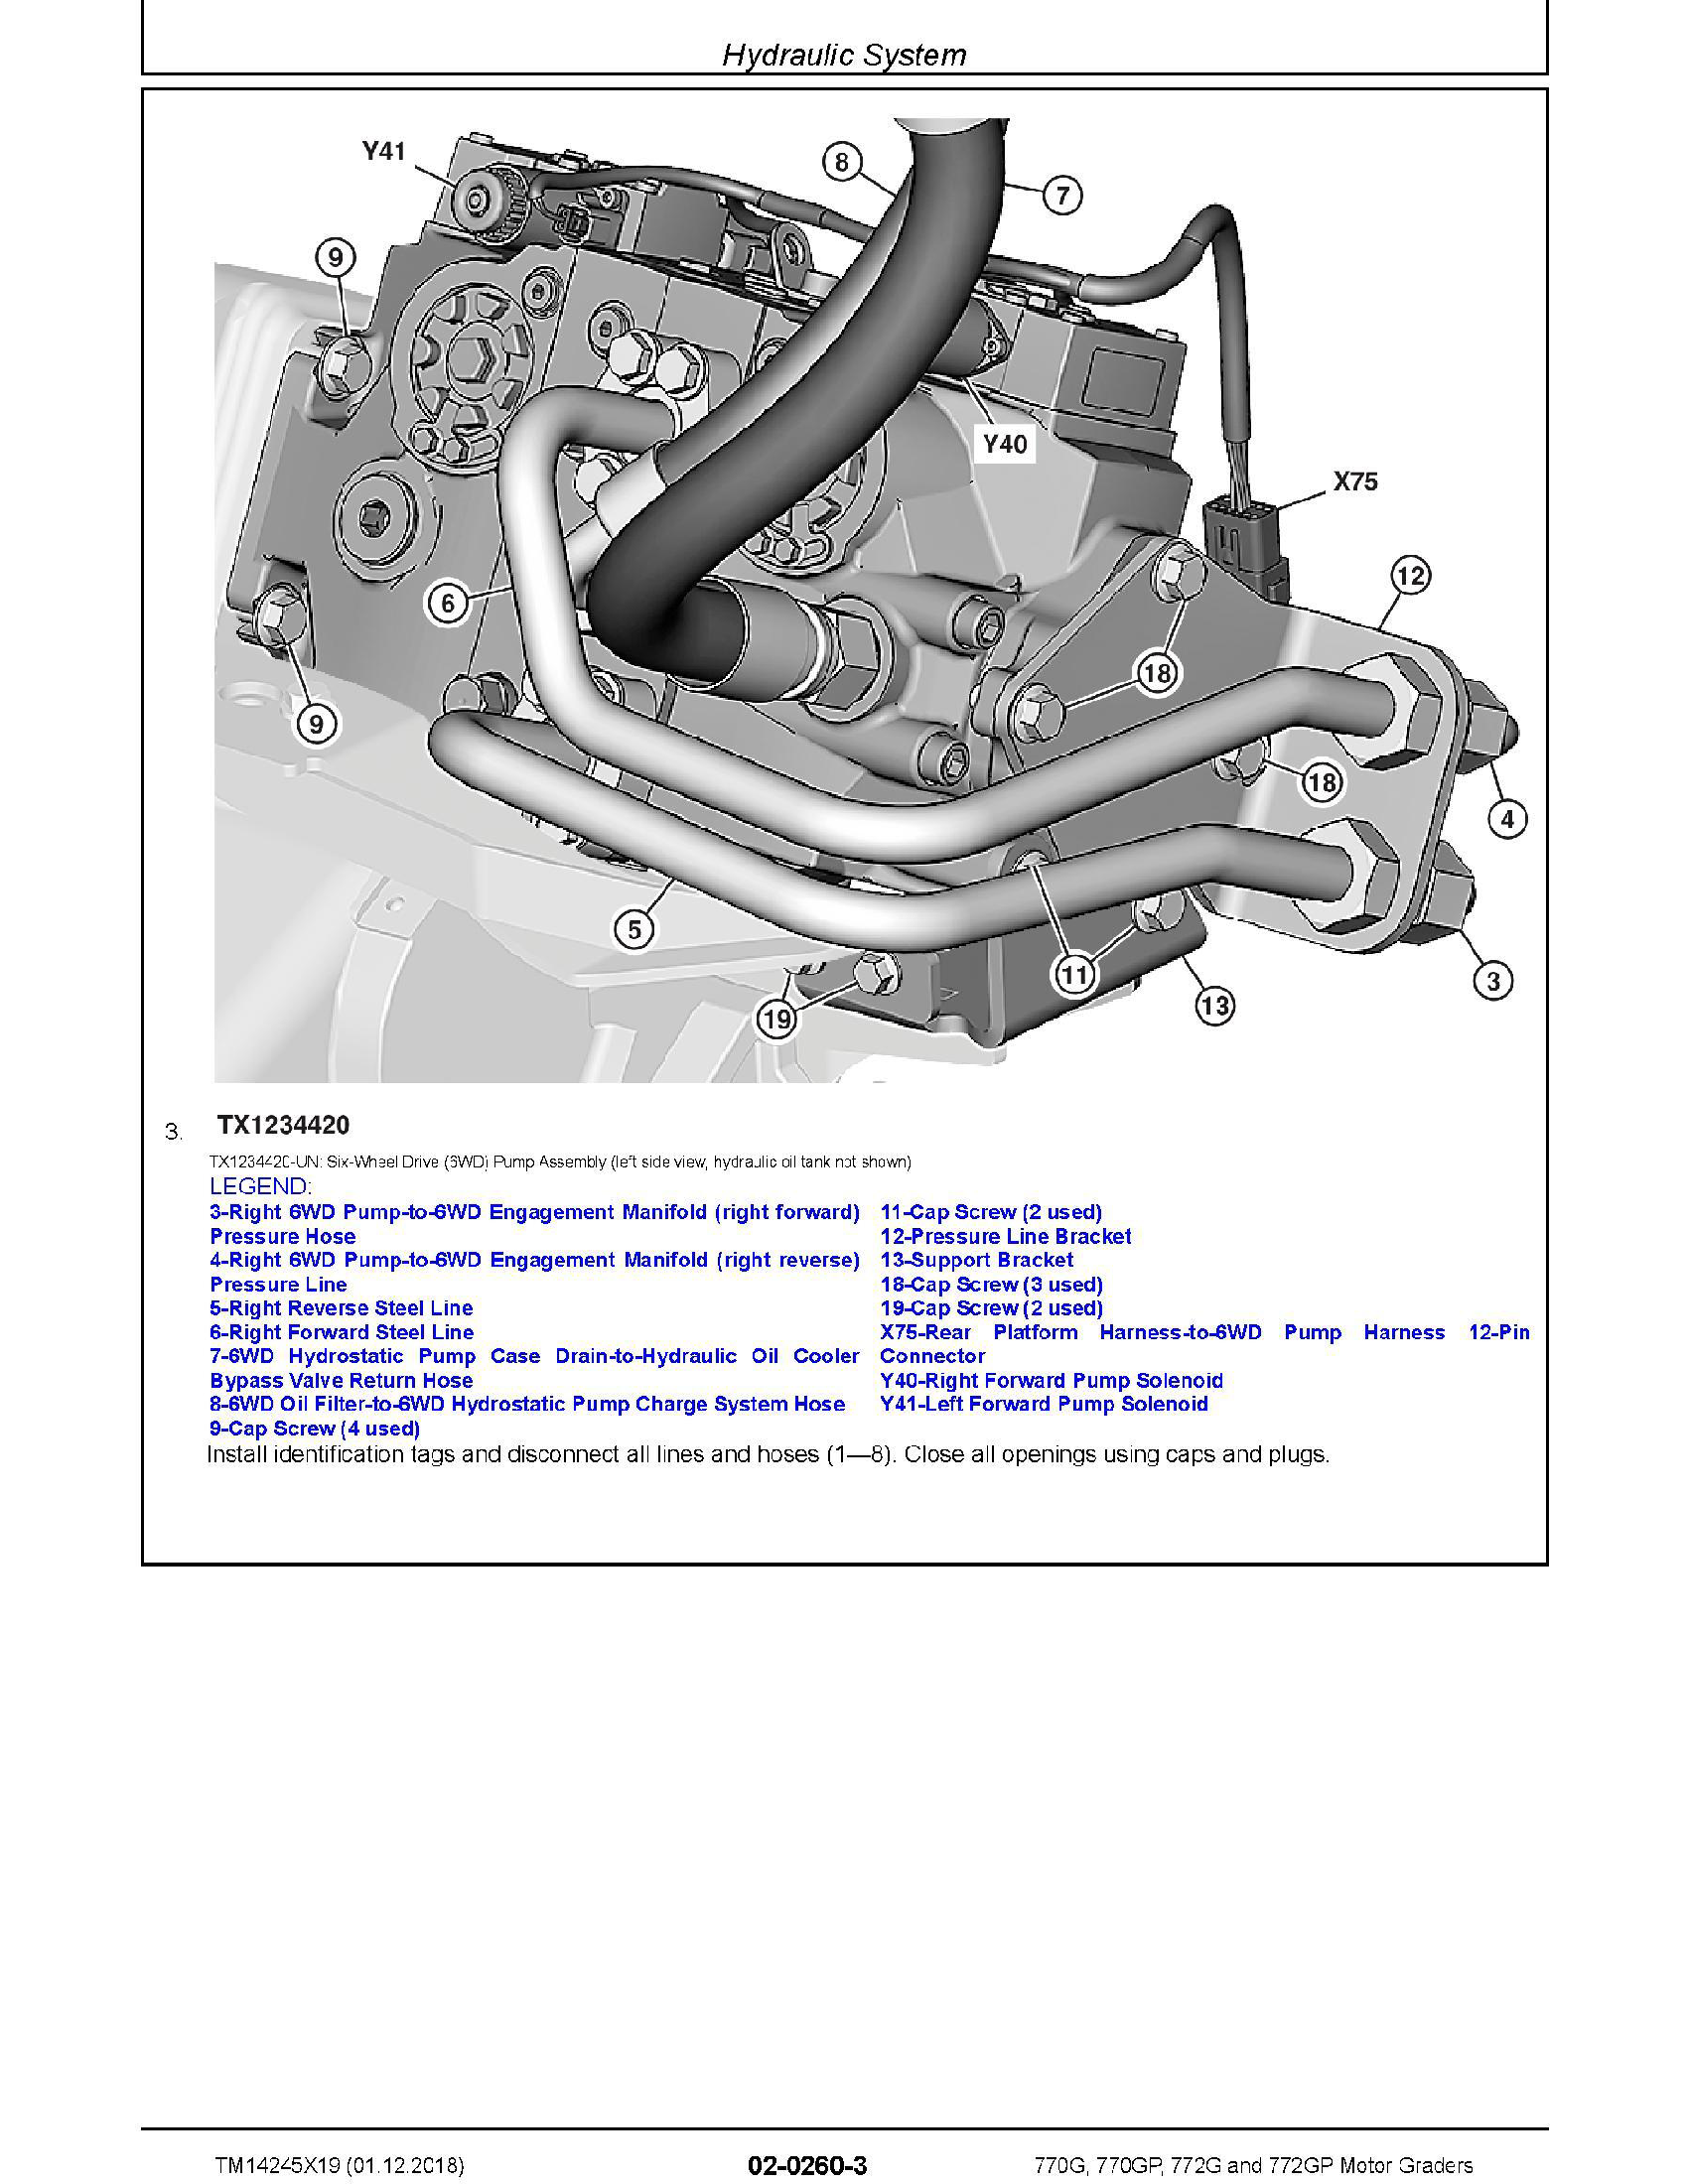 John Deere 862B manual pdf